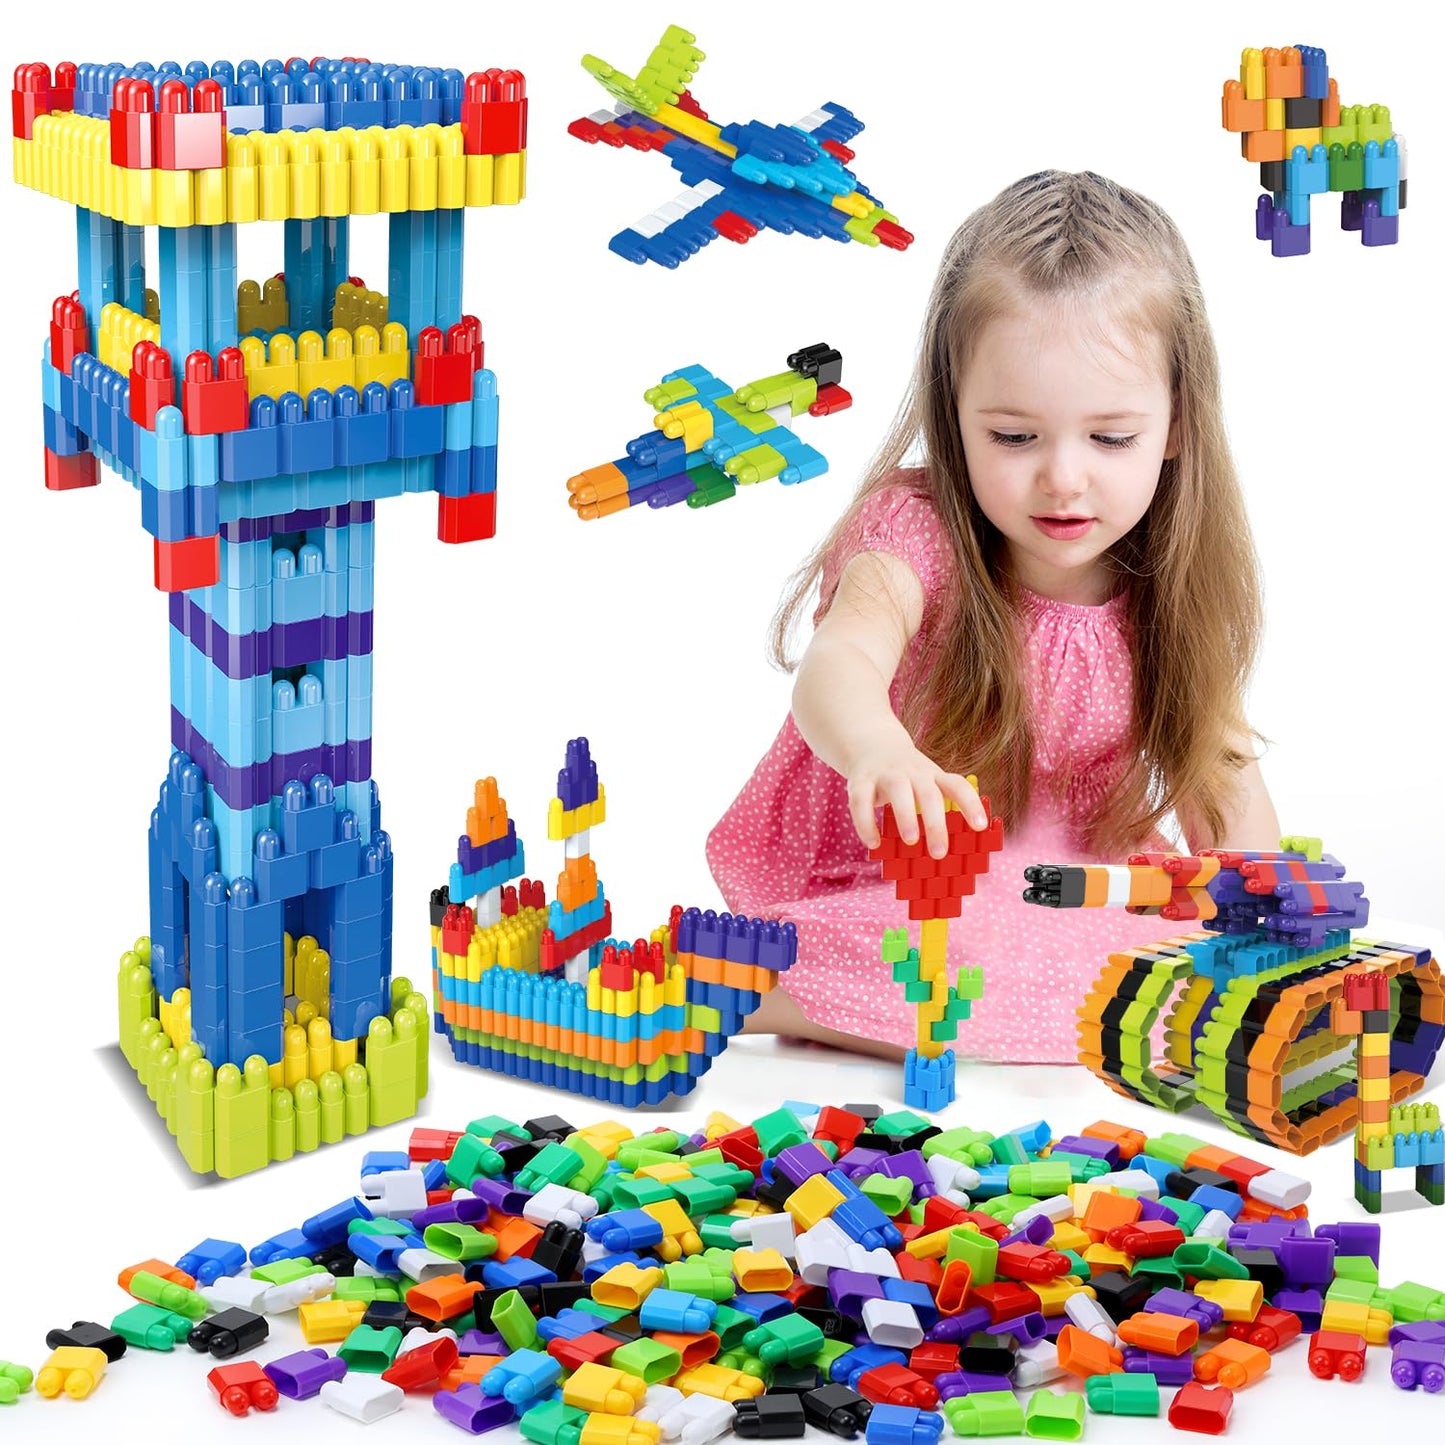 HOLYFUN Building Blocks Set Toy, 398 PCS Classroom Learning Playset Educational Kit Preschool Kindergarten Toy for Kids, Toddler, Boys and Girls